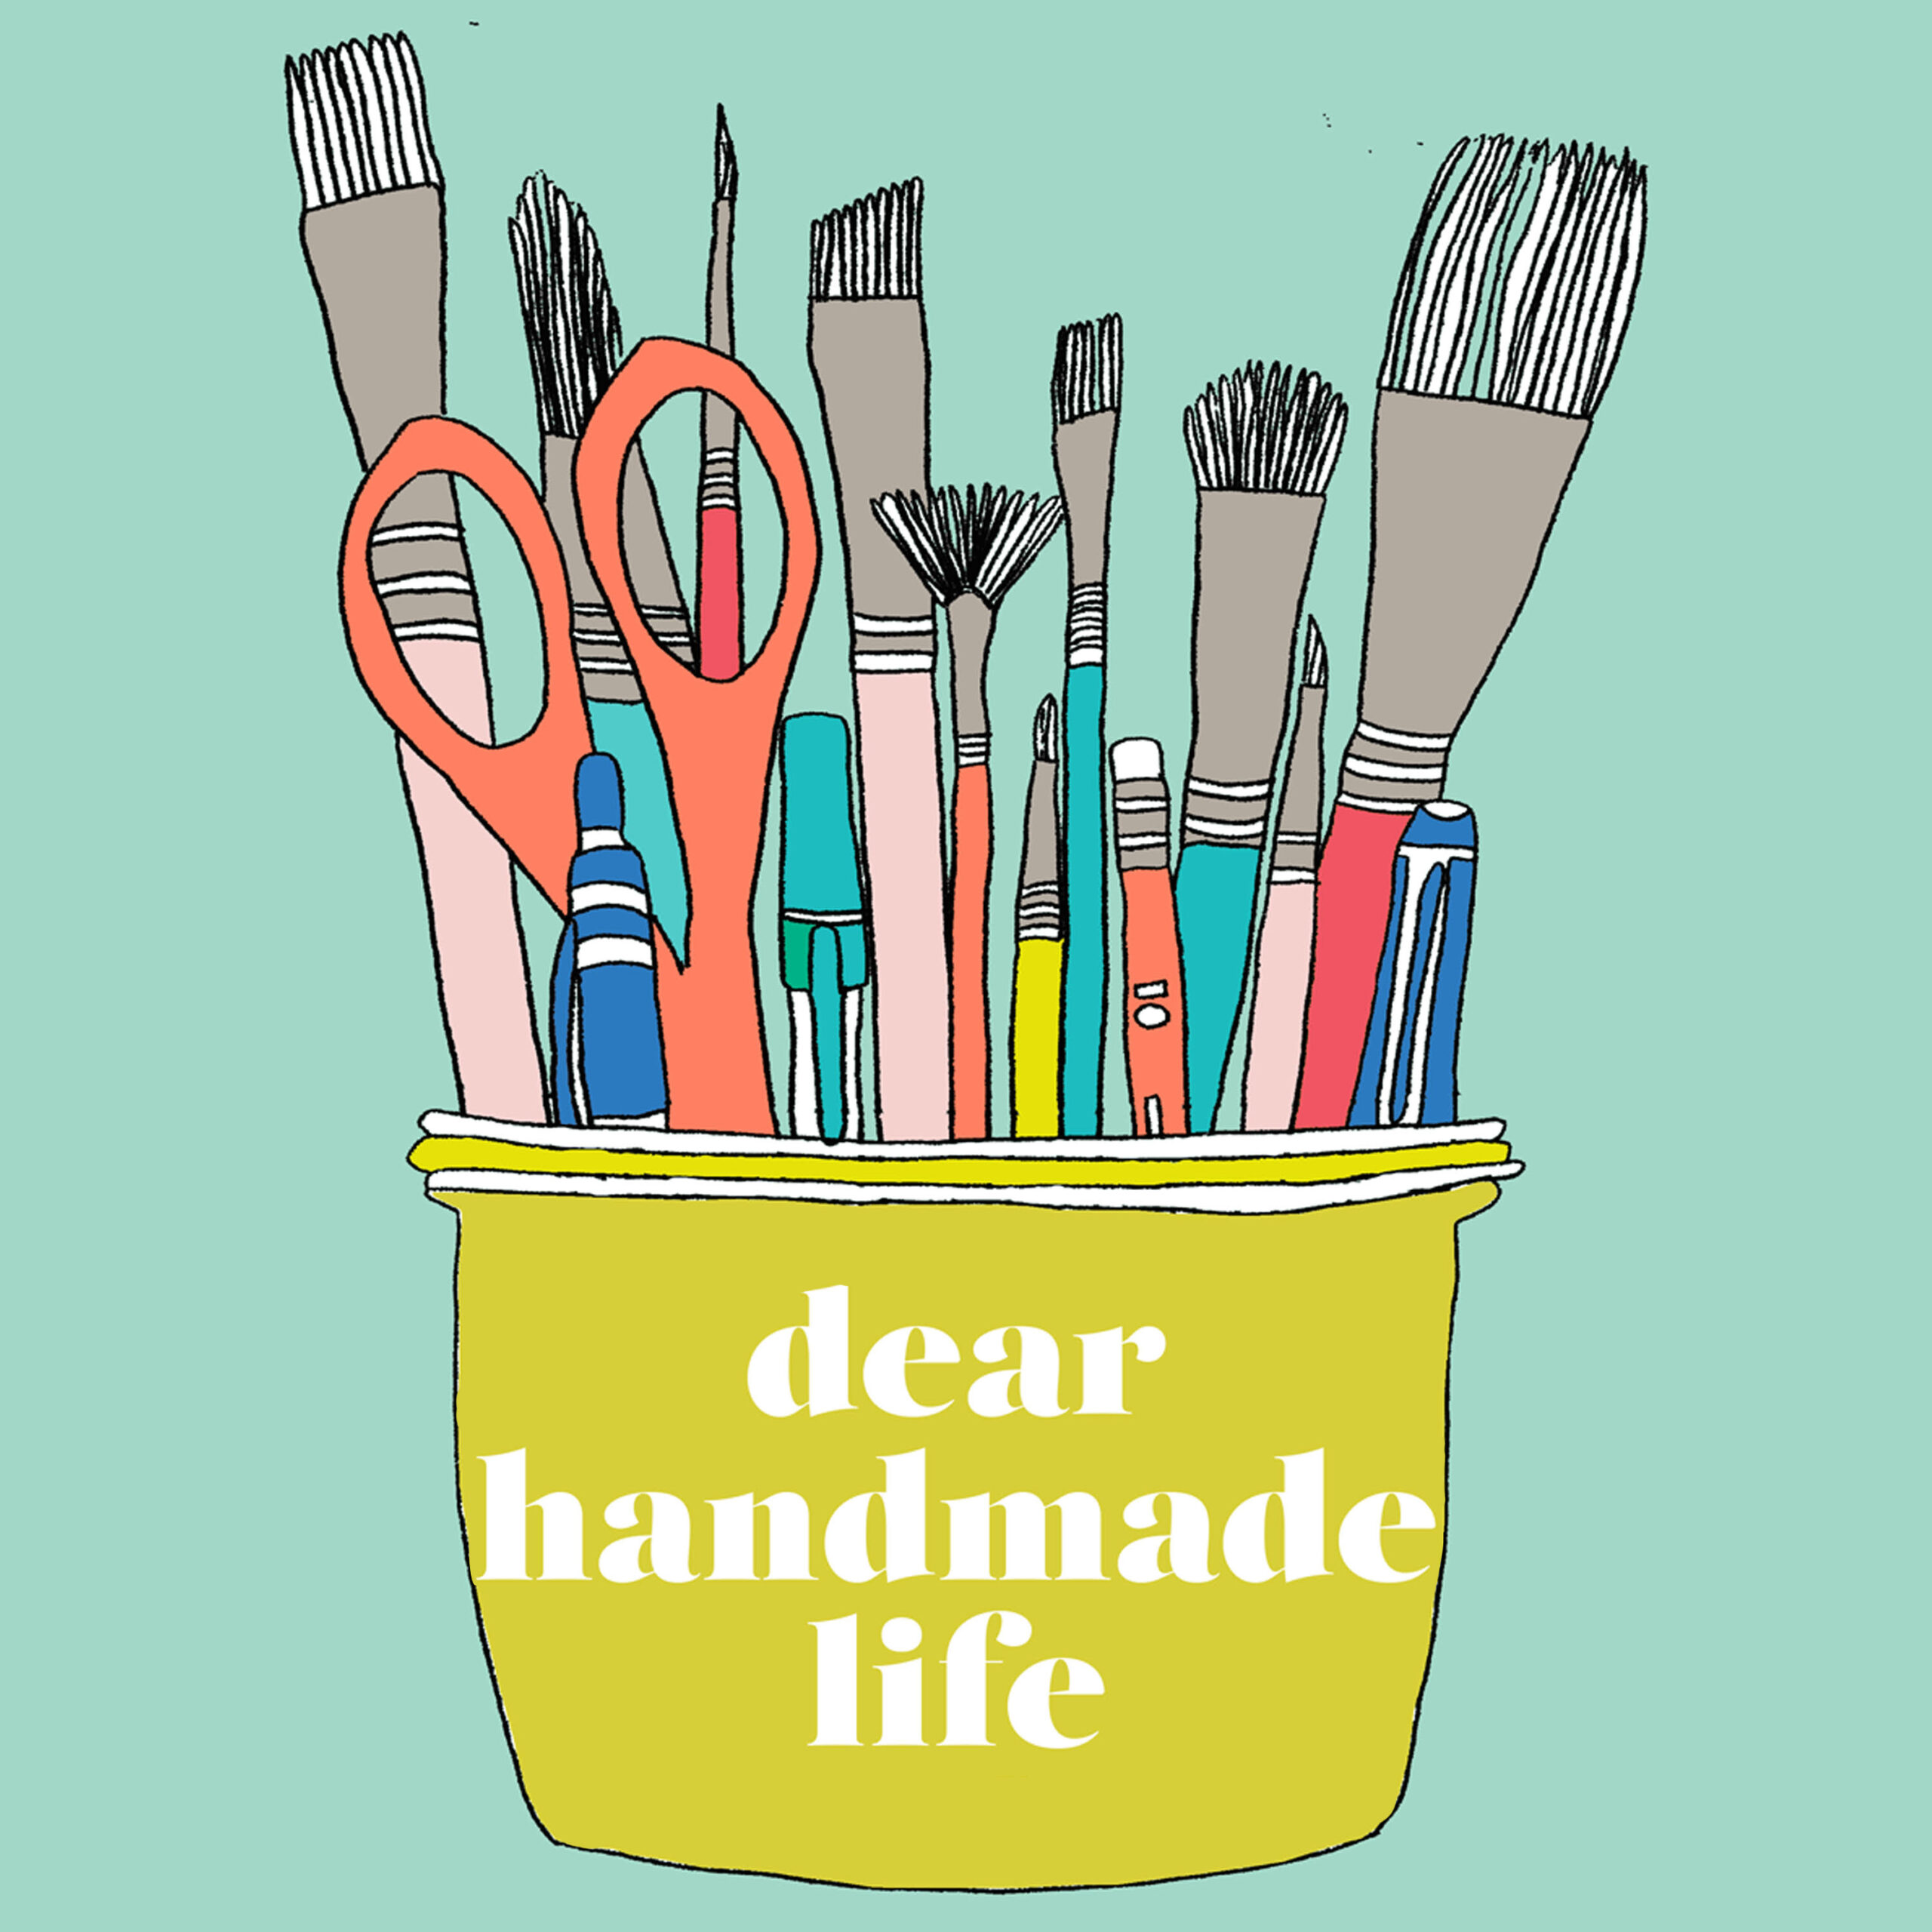 Dear Handmade Life